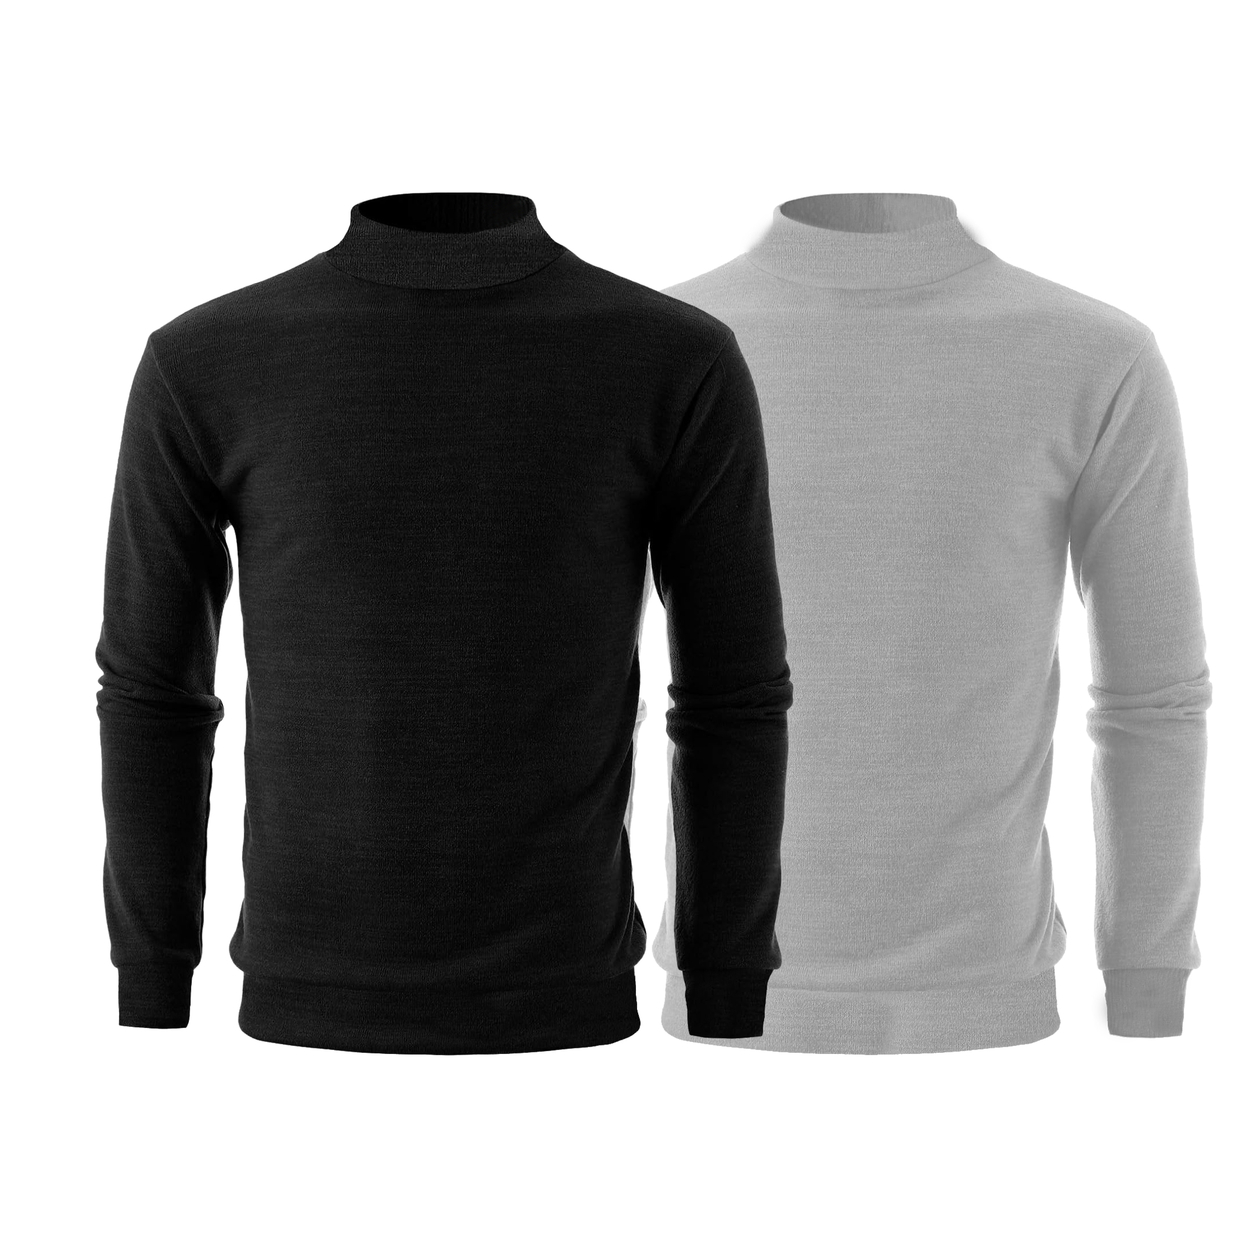 2-Pack: Men's Winter Warm Cozy Knit Slim Fit Mock Neck Sweater - Black & Black, Medium